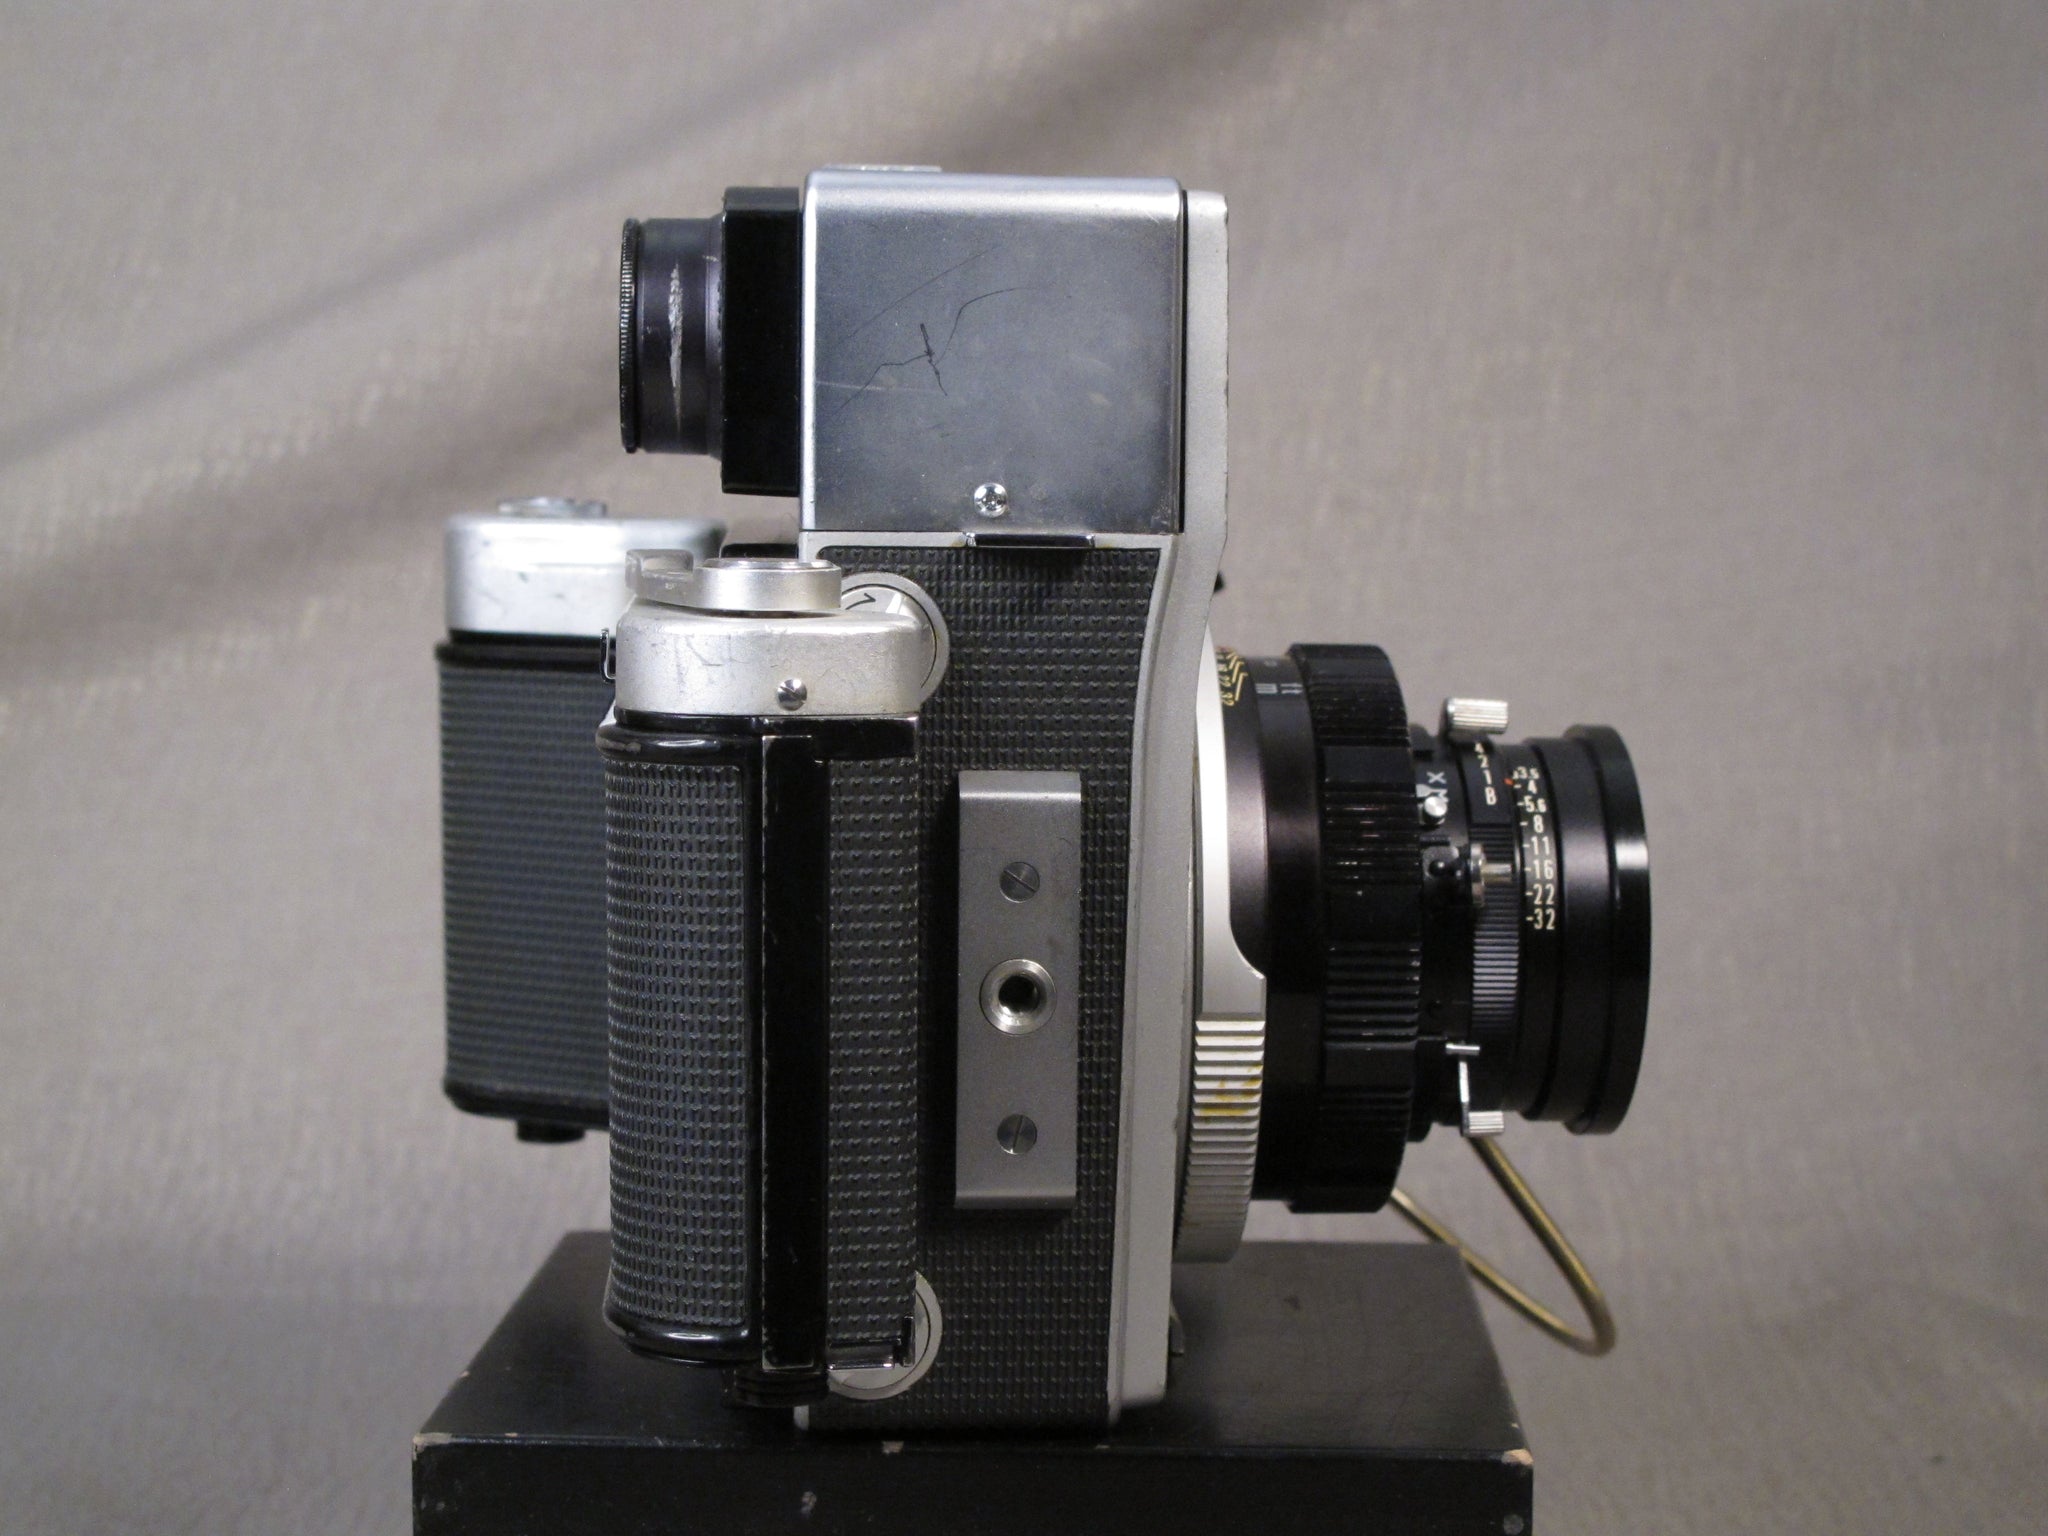 Mamiya SEKOR Super 23 medium format camera with 100mm f3.5 and